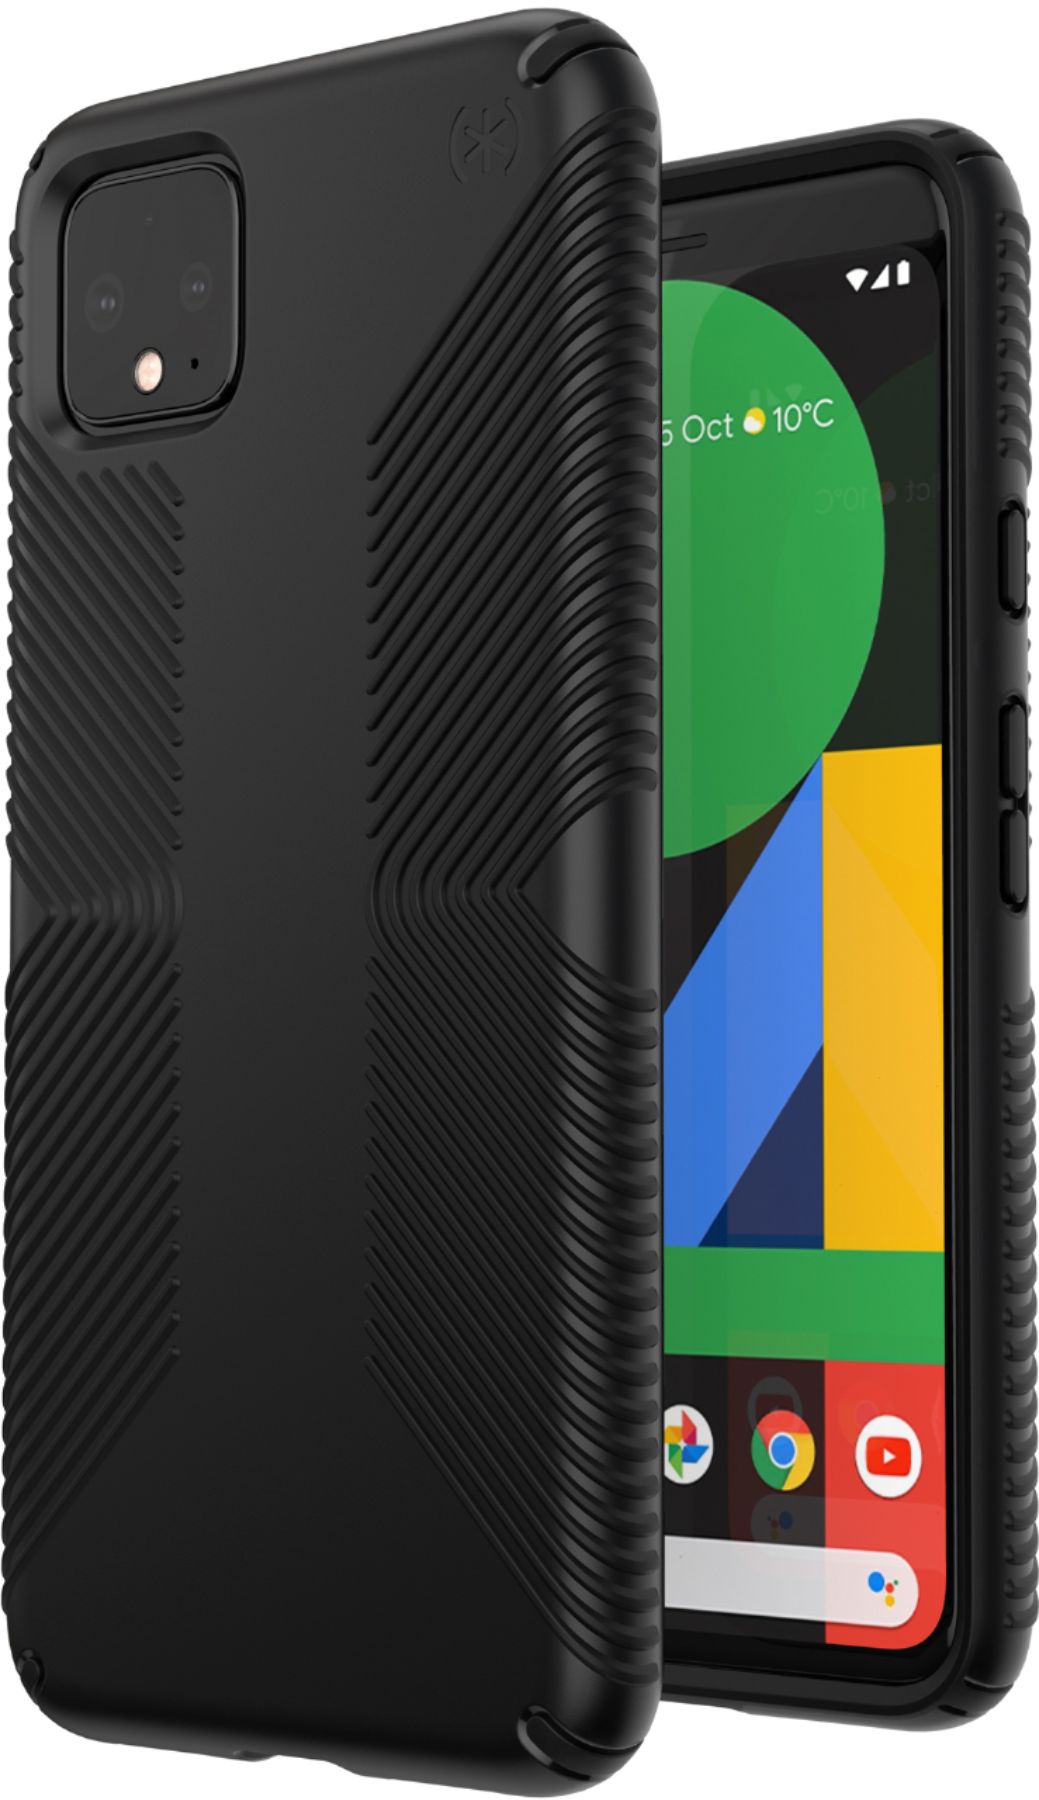 Details about   NEW Speck Presidio Grip Smartphone Case for Google Pixel 4 XL Black 